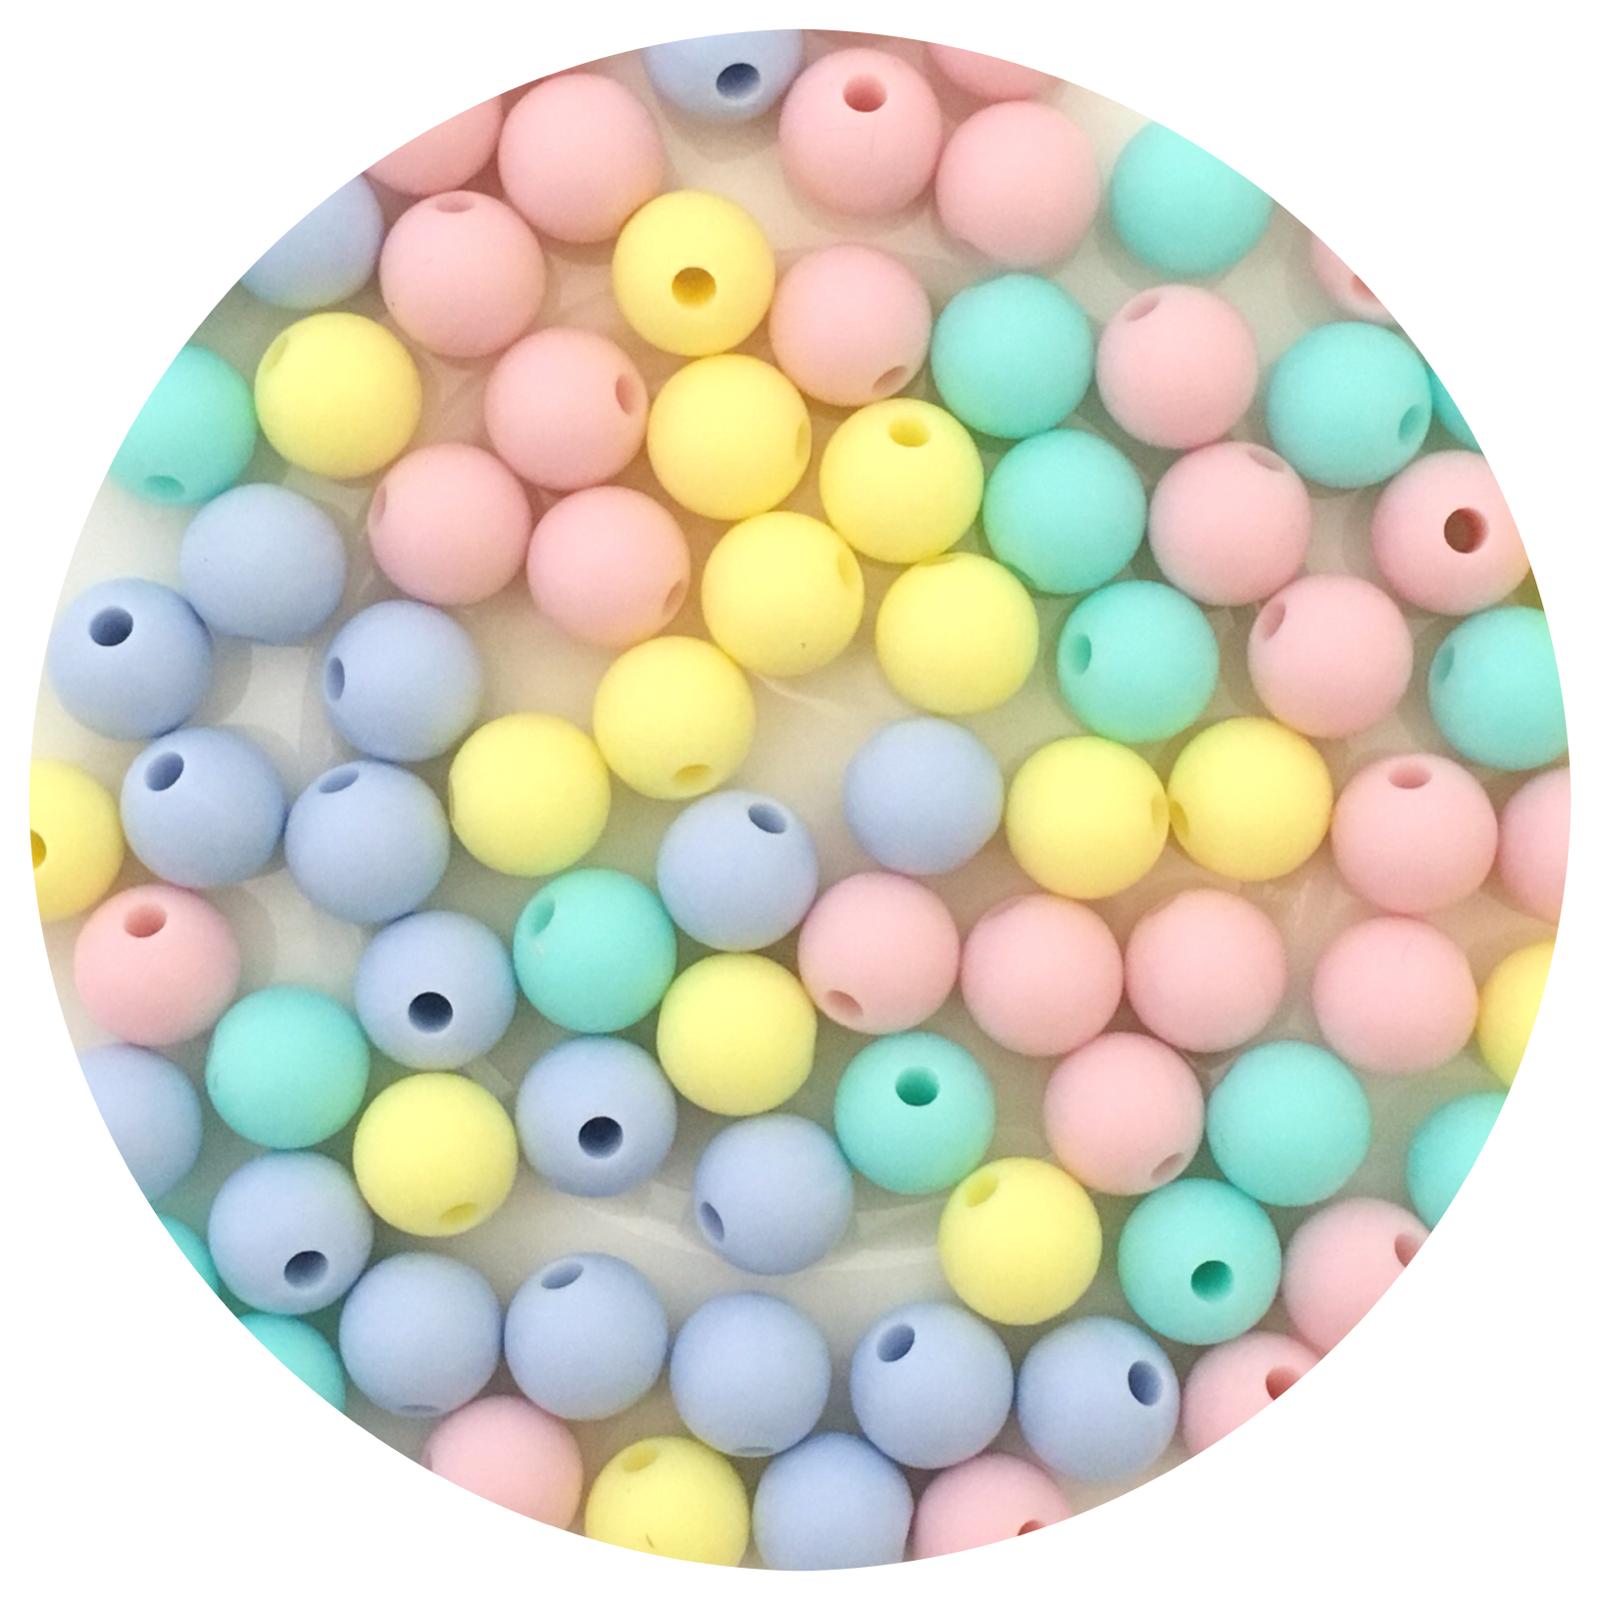 Pastels Mix - 9mm round Silicone Beads - Aqua, Buttery Yellow, Blush, Pastel Blue - 40 Beads